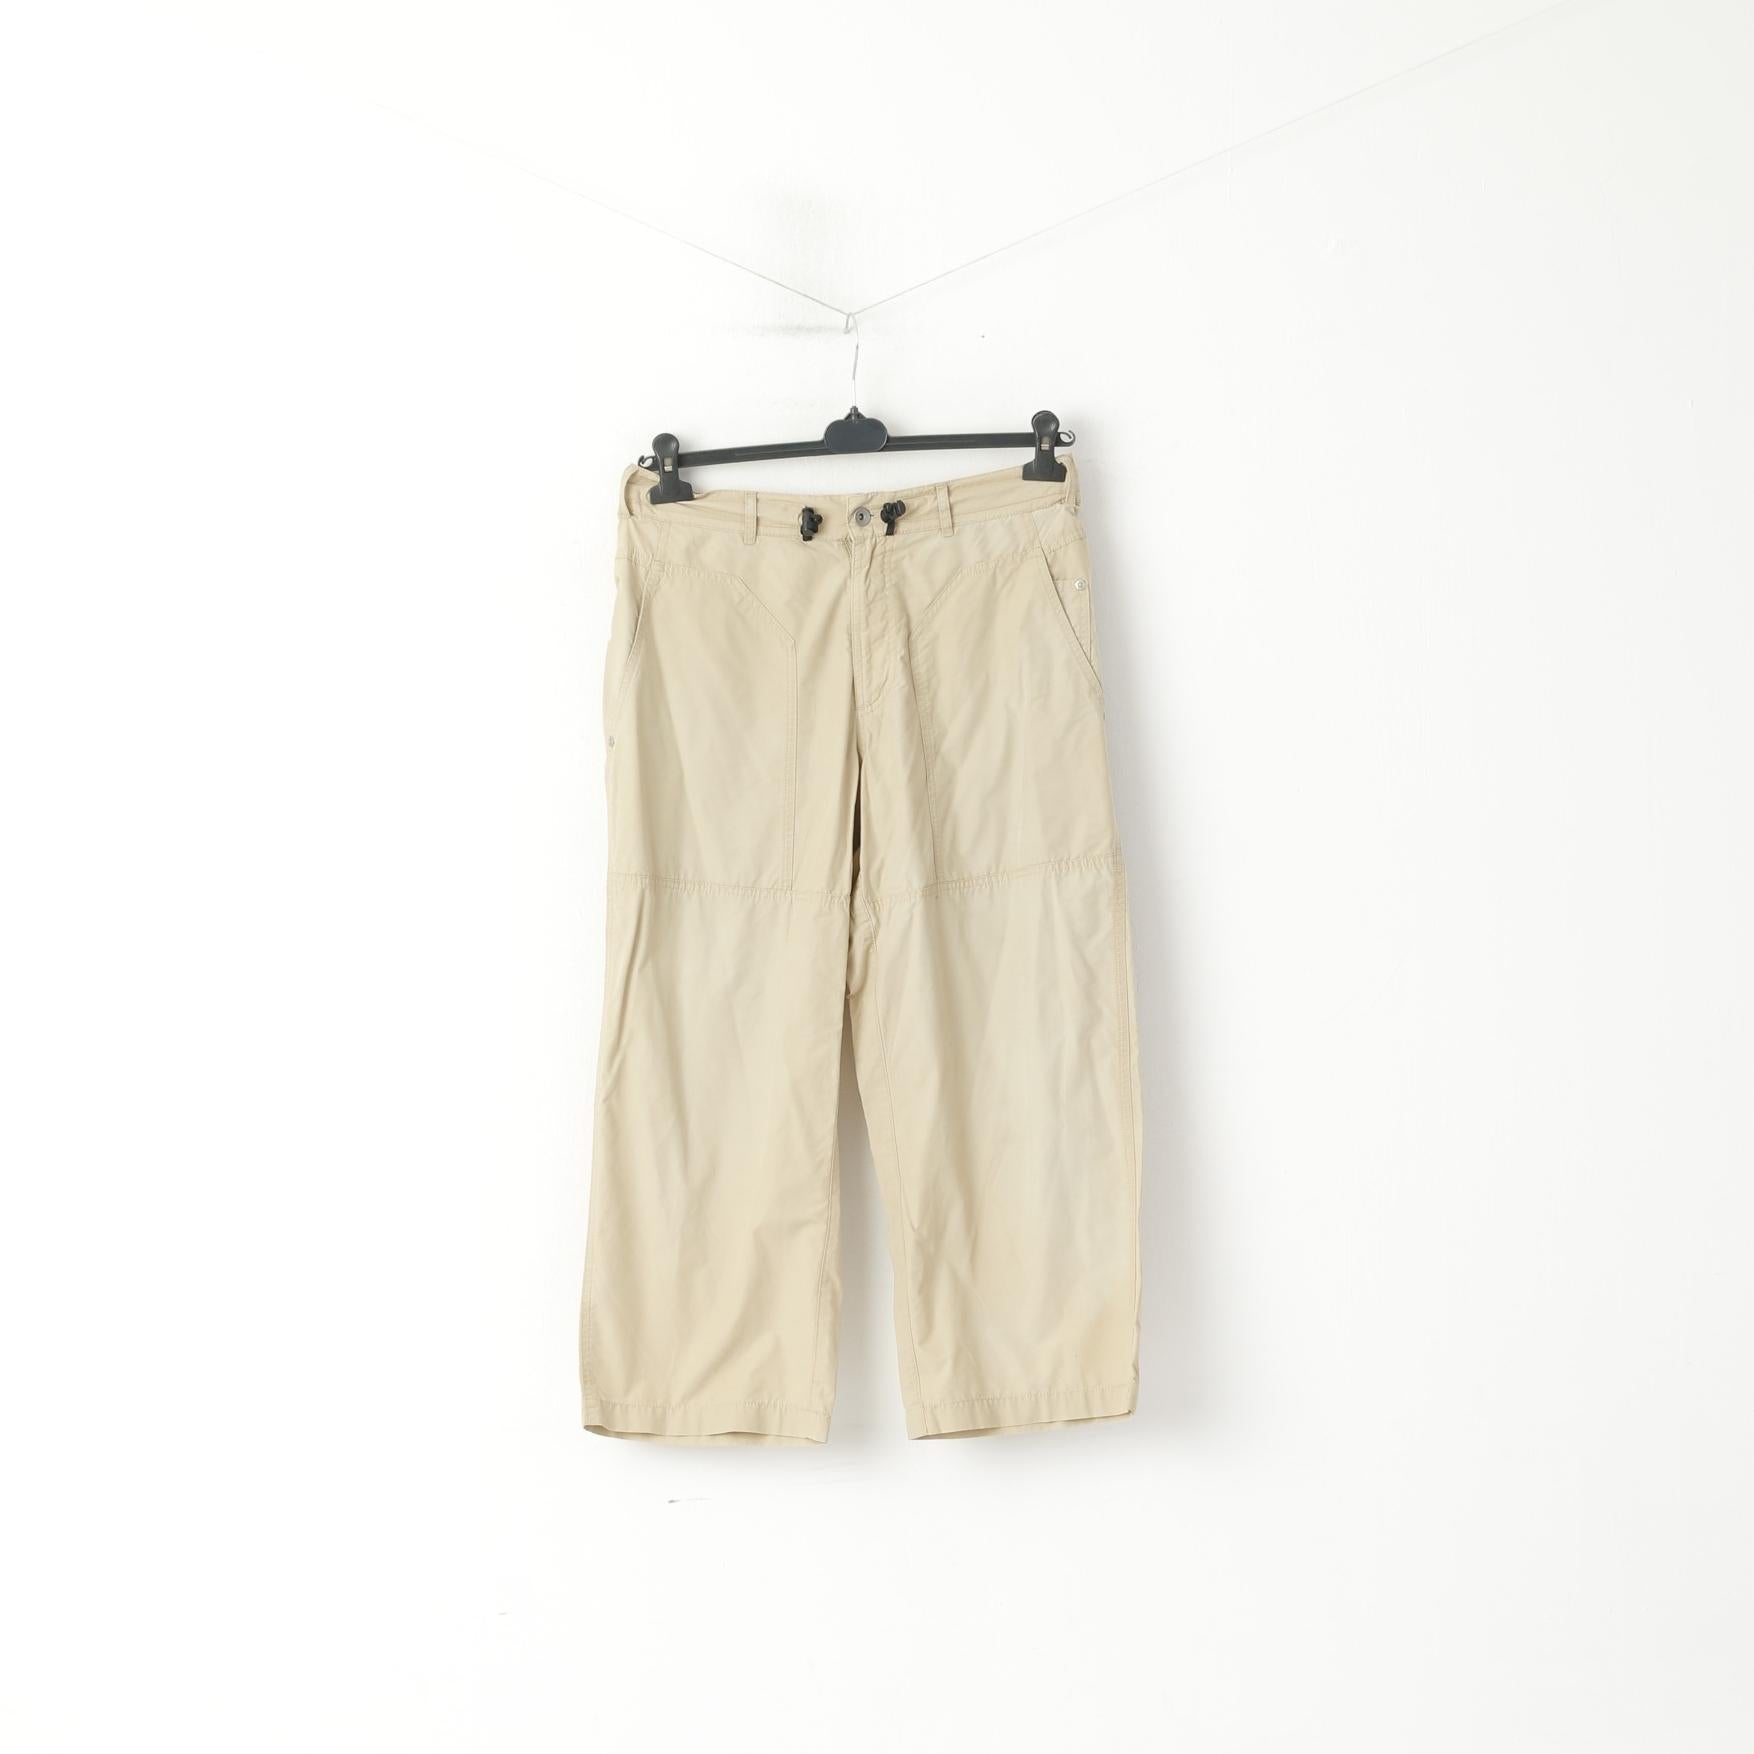 Chiemsee Men L Capri Trousers Beige Cotton Nylon Blend Surf Cargo Sportswear Pants